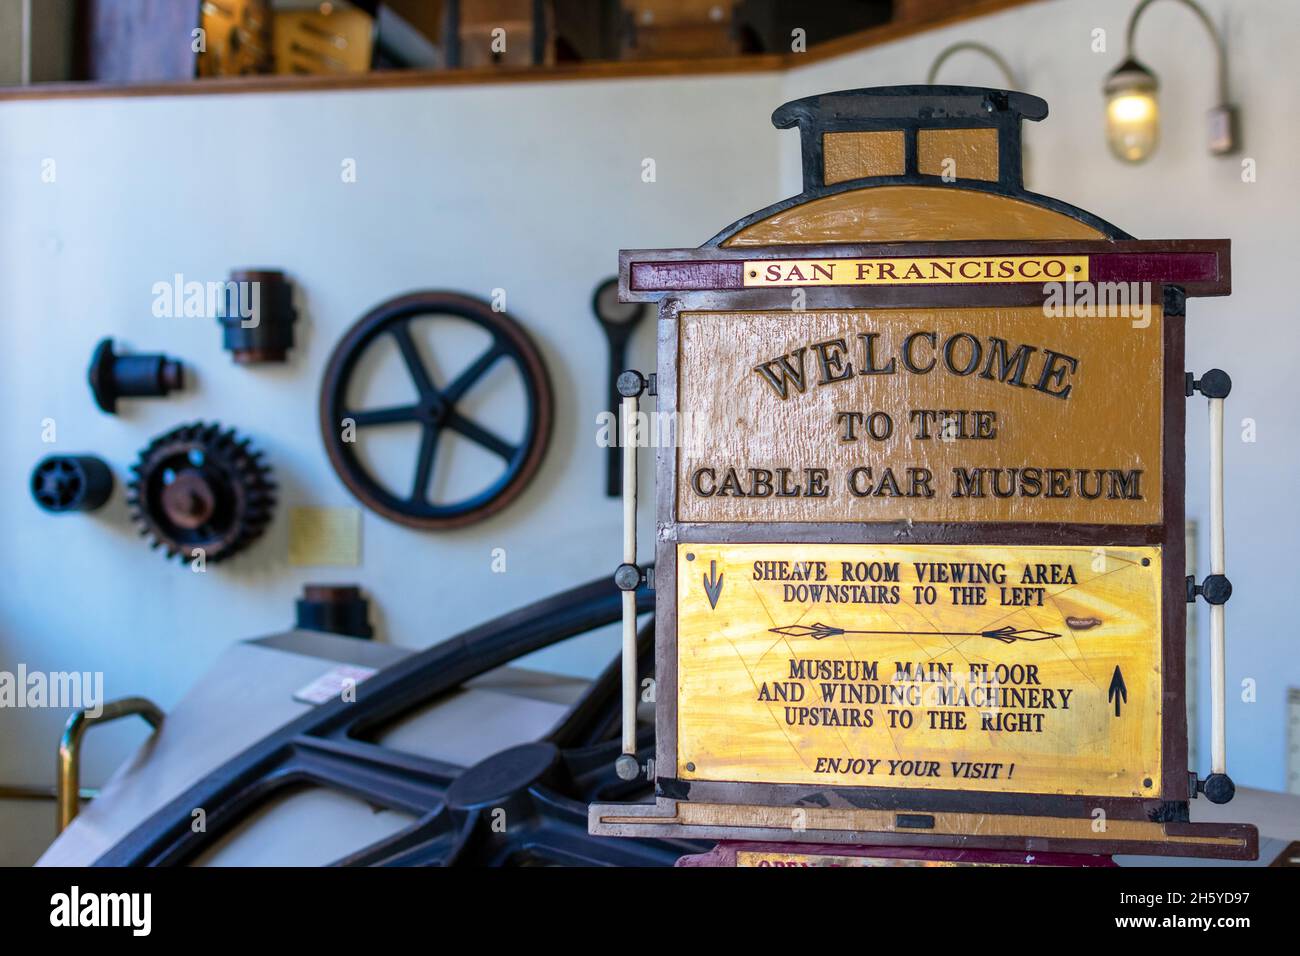 Cable car museum welcome sign - San Francisco, California, USA - 2021 Stock Photo